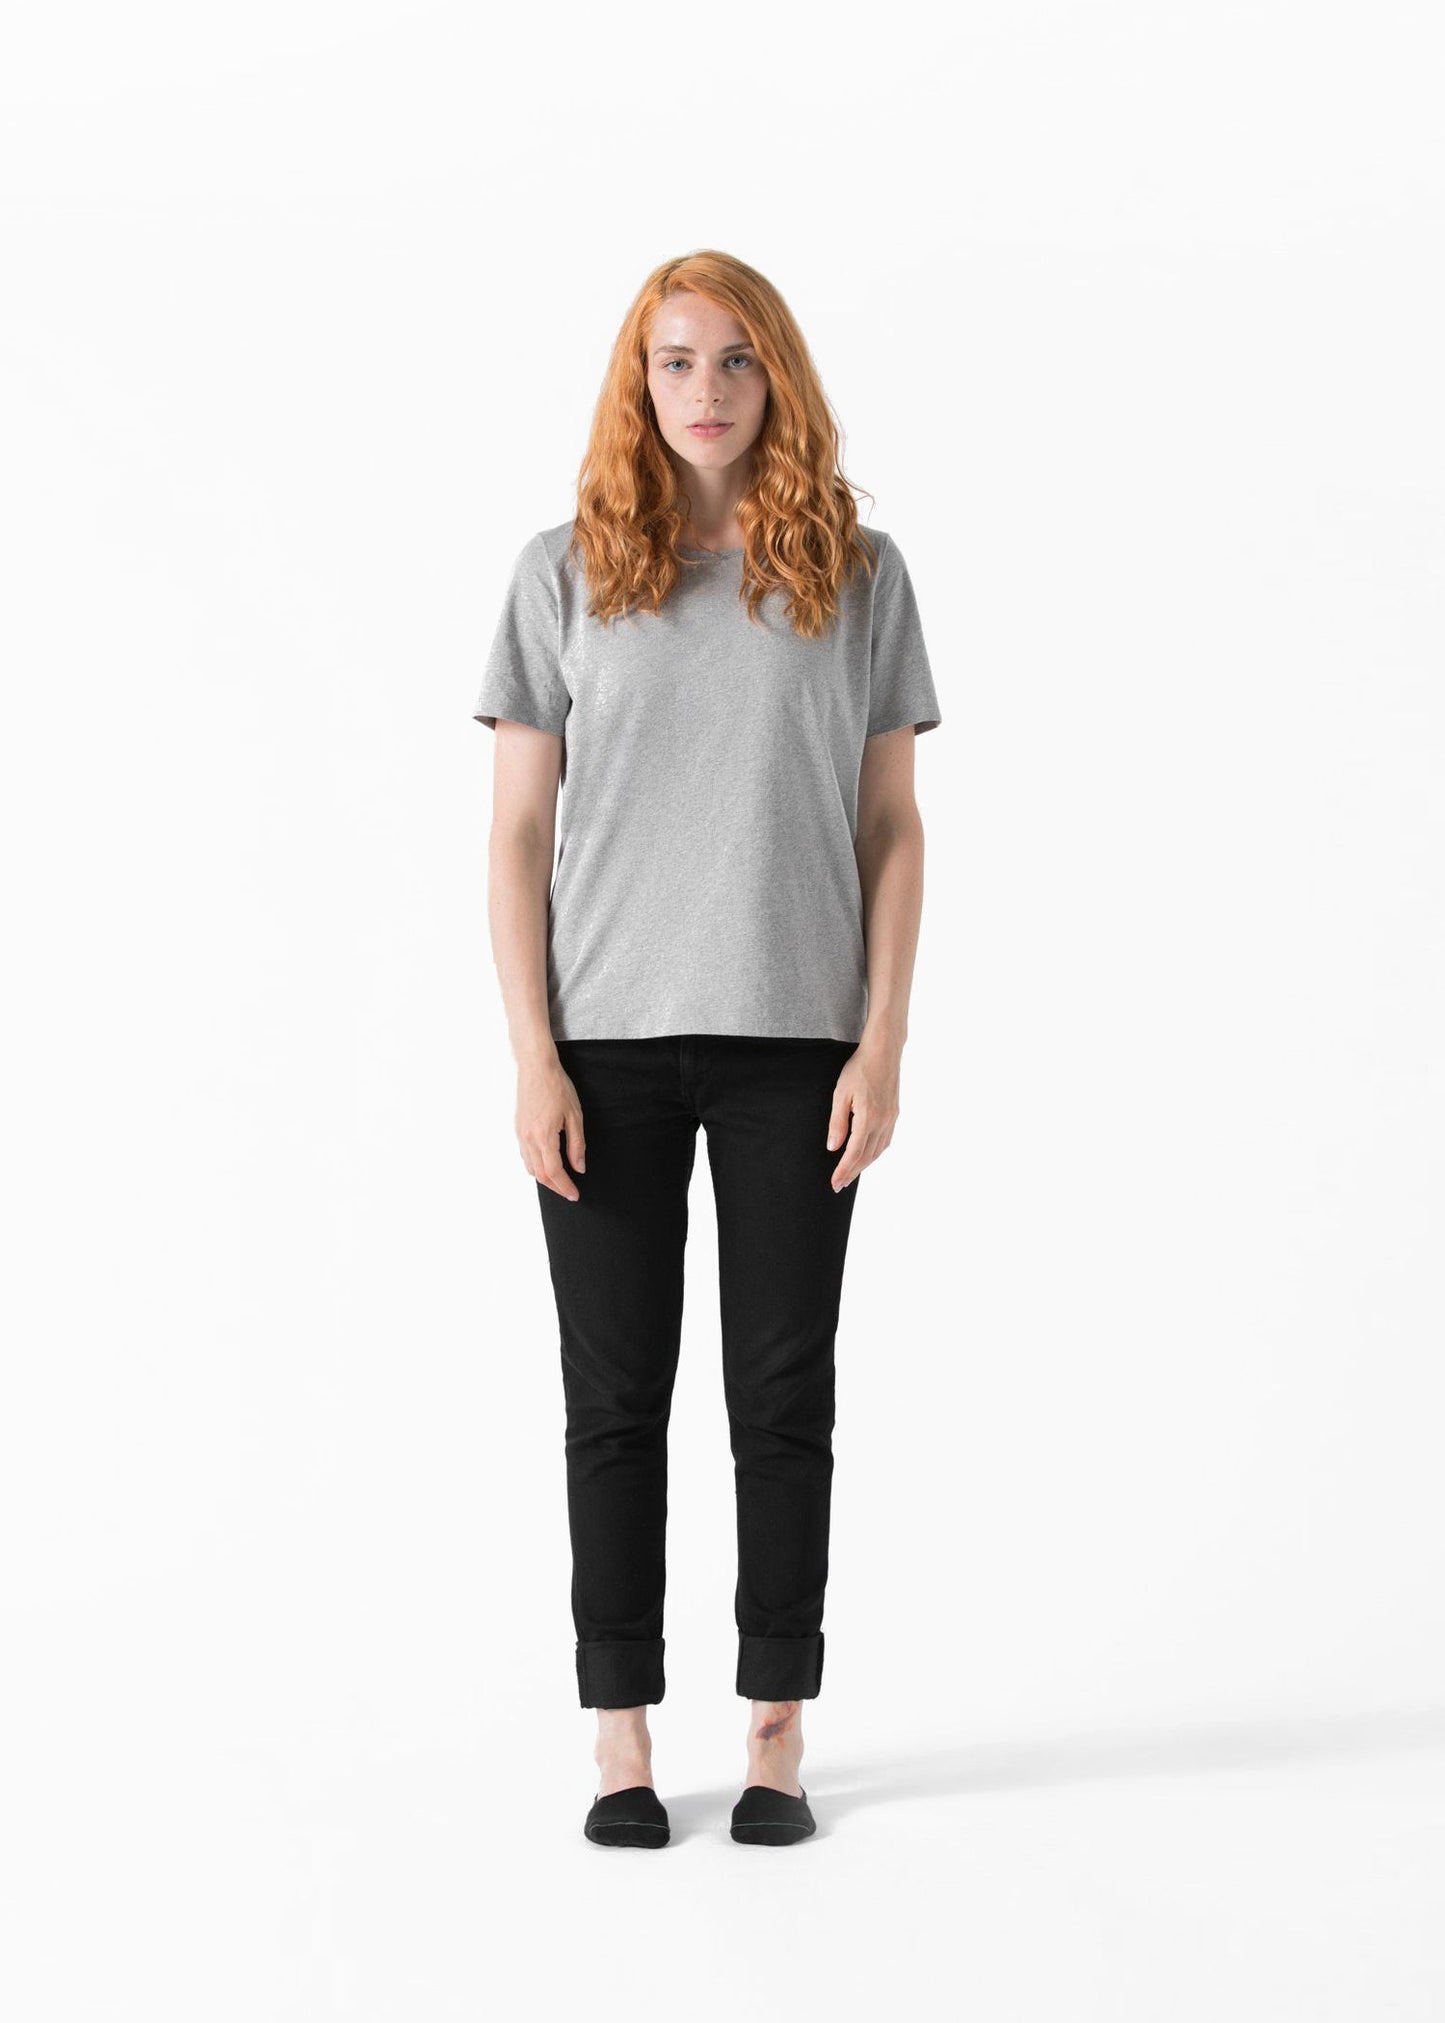 Camiseta algodón orgánico Mujer (7 unidades)